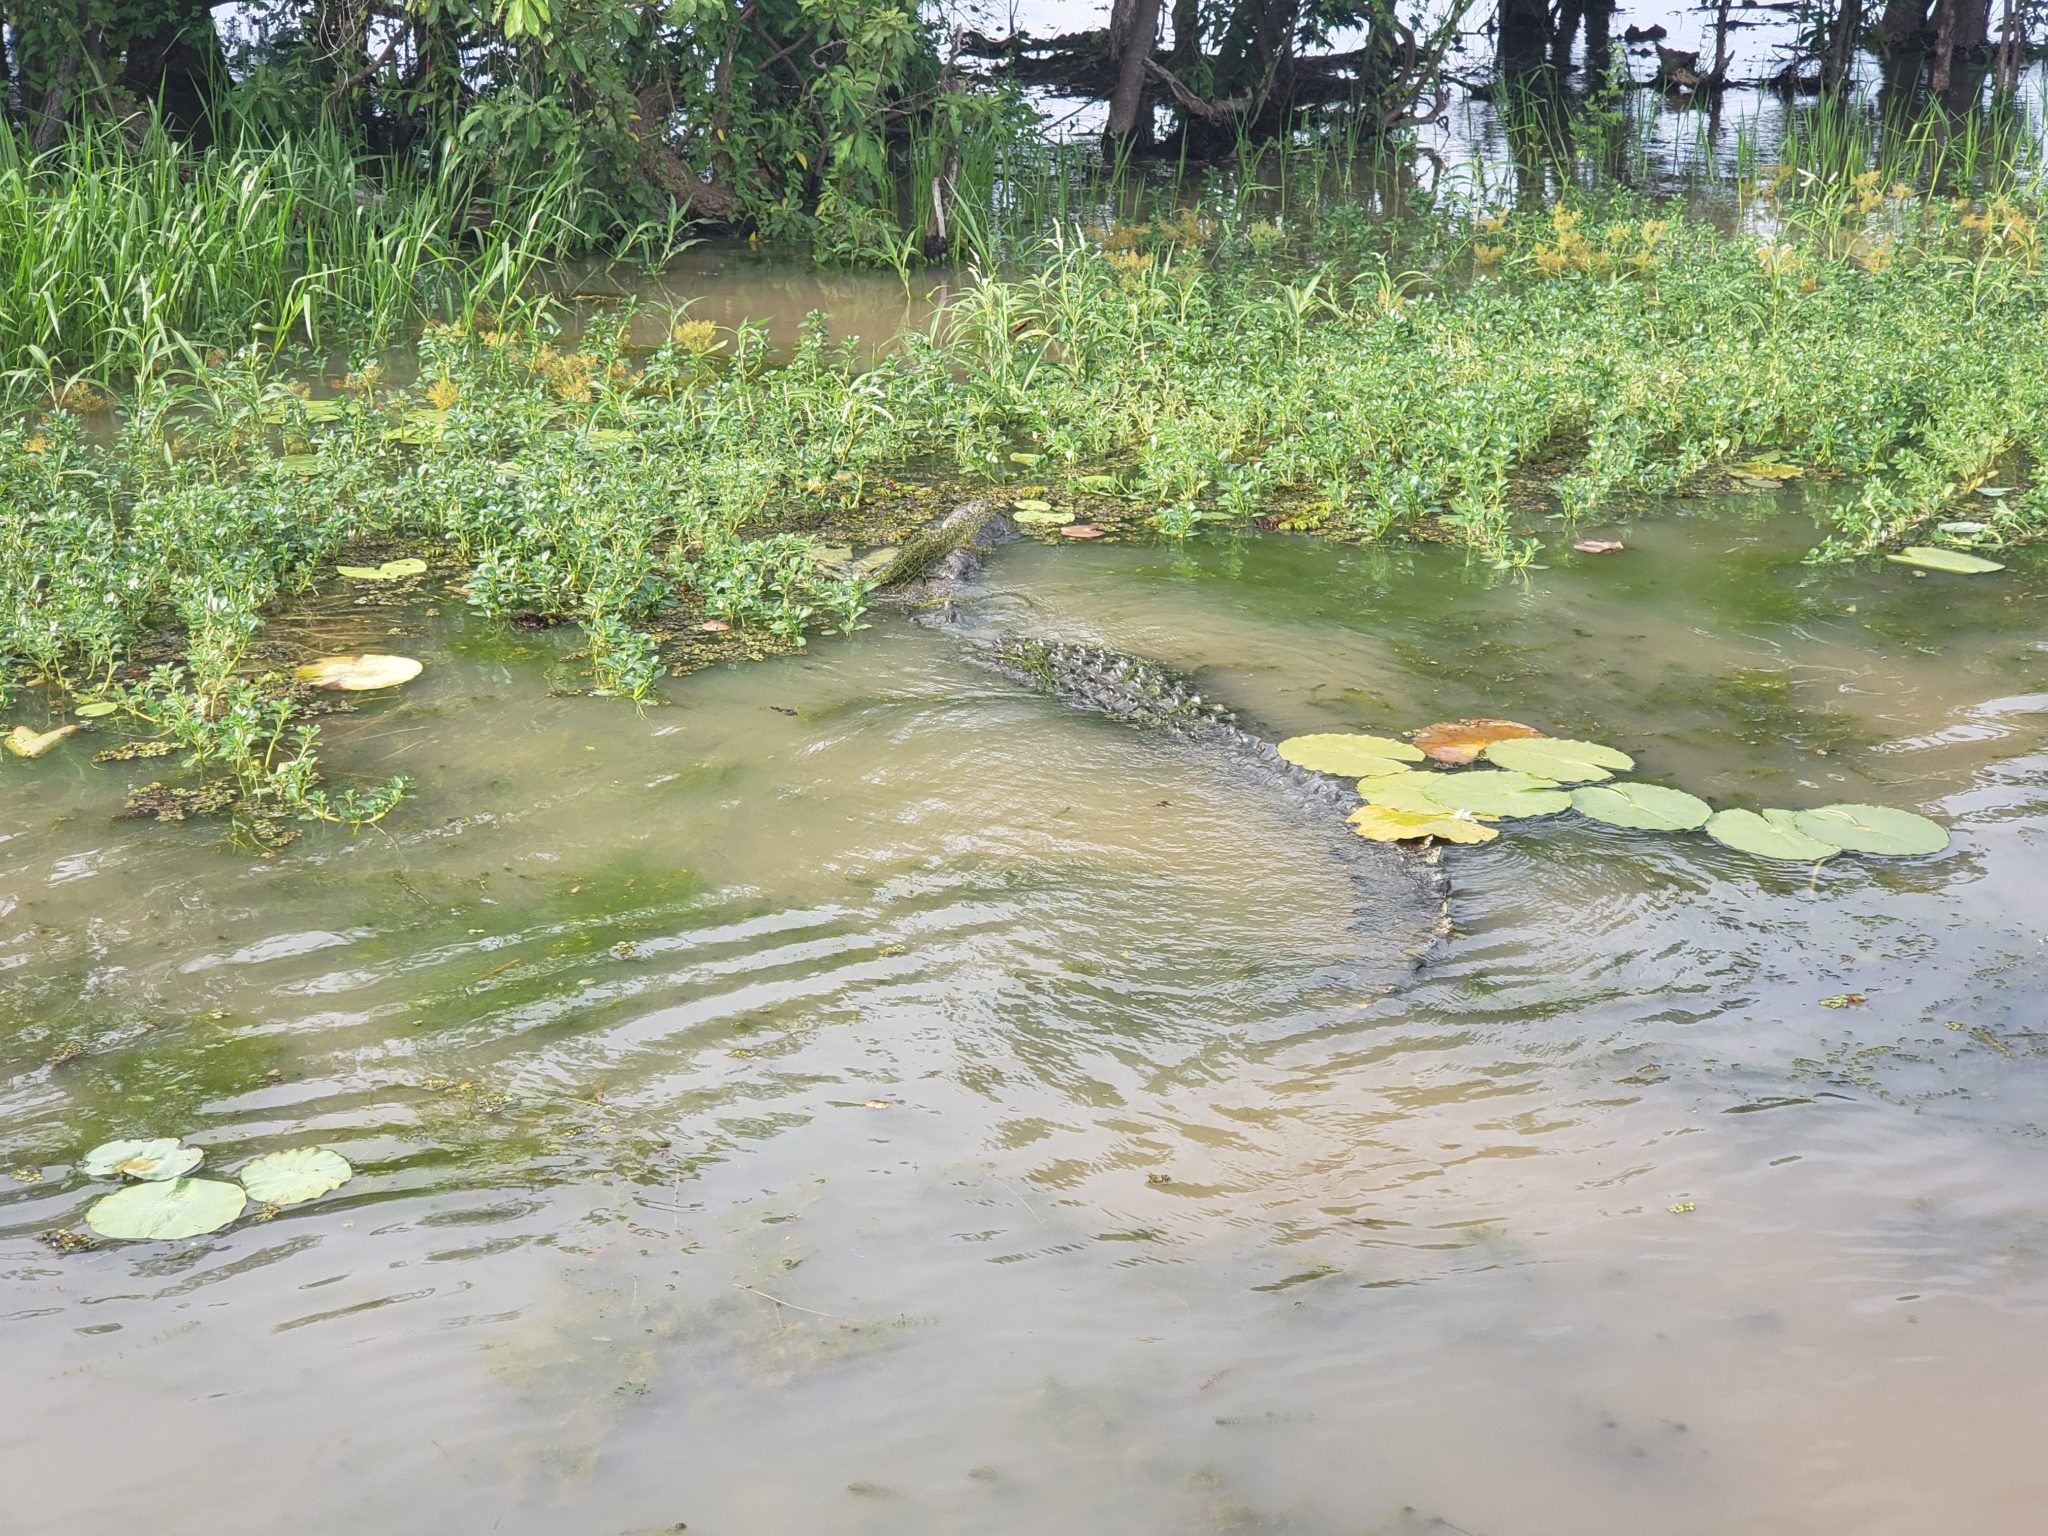 a crocodile swimming in a swamp